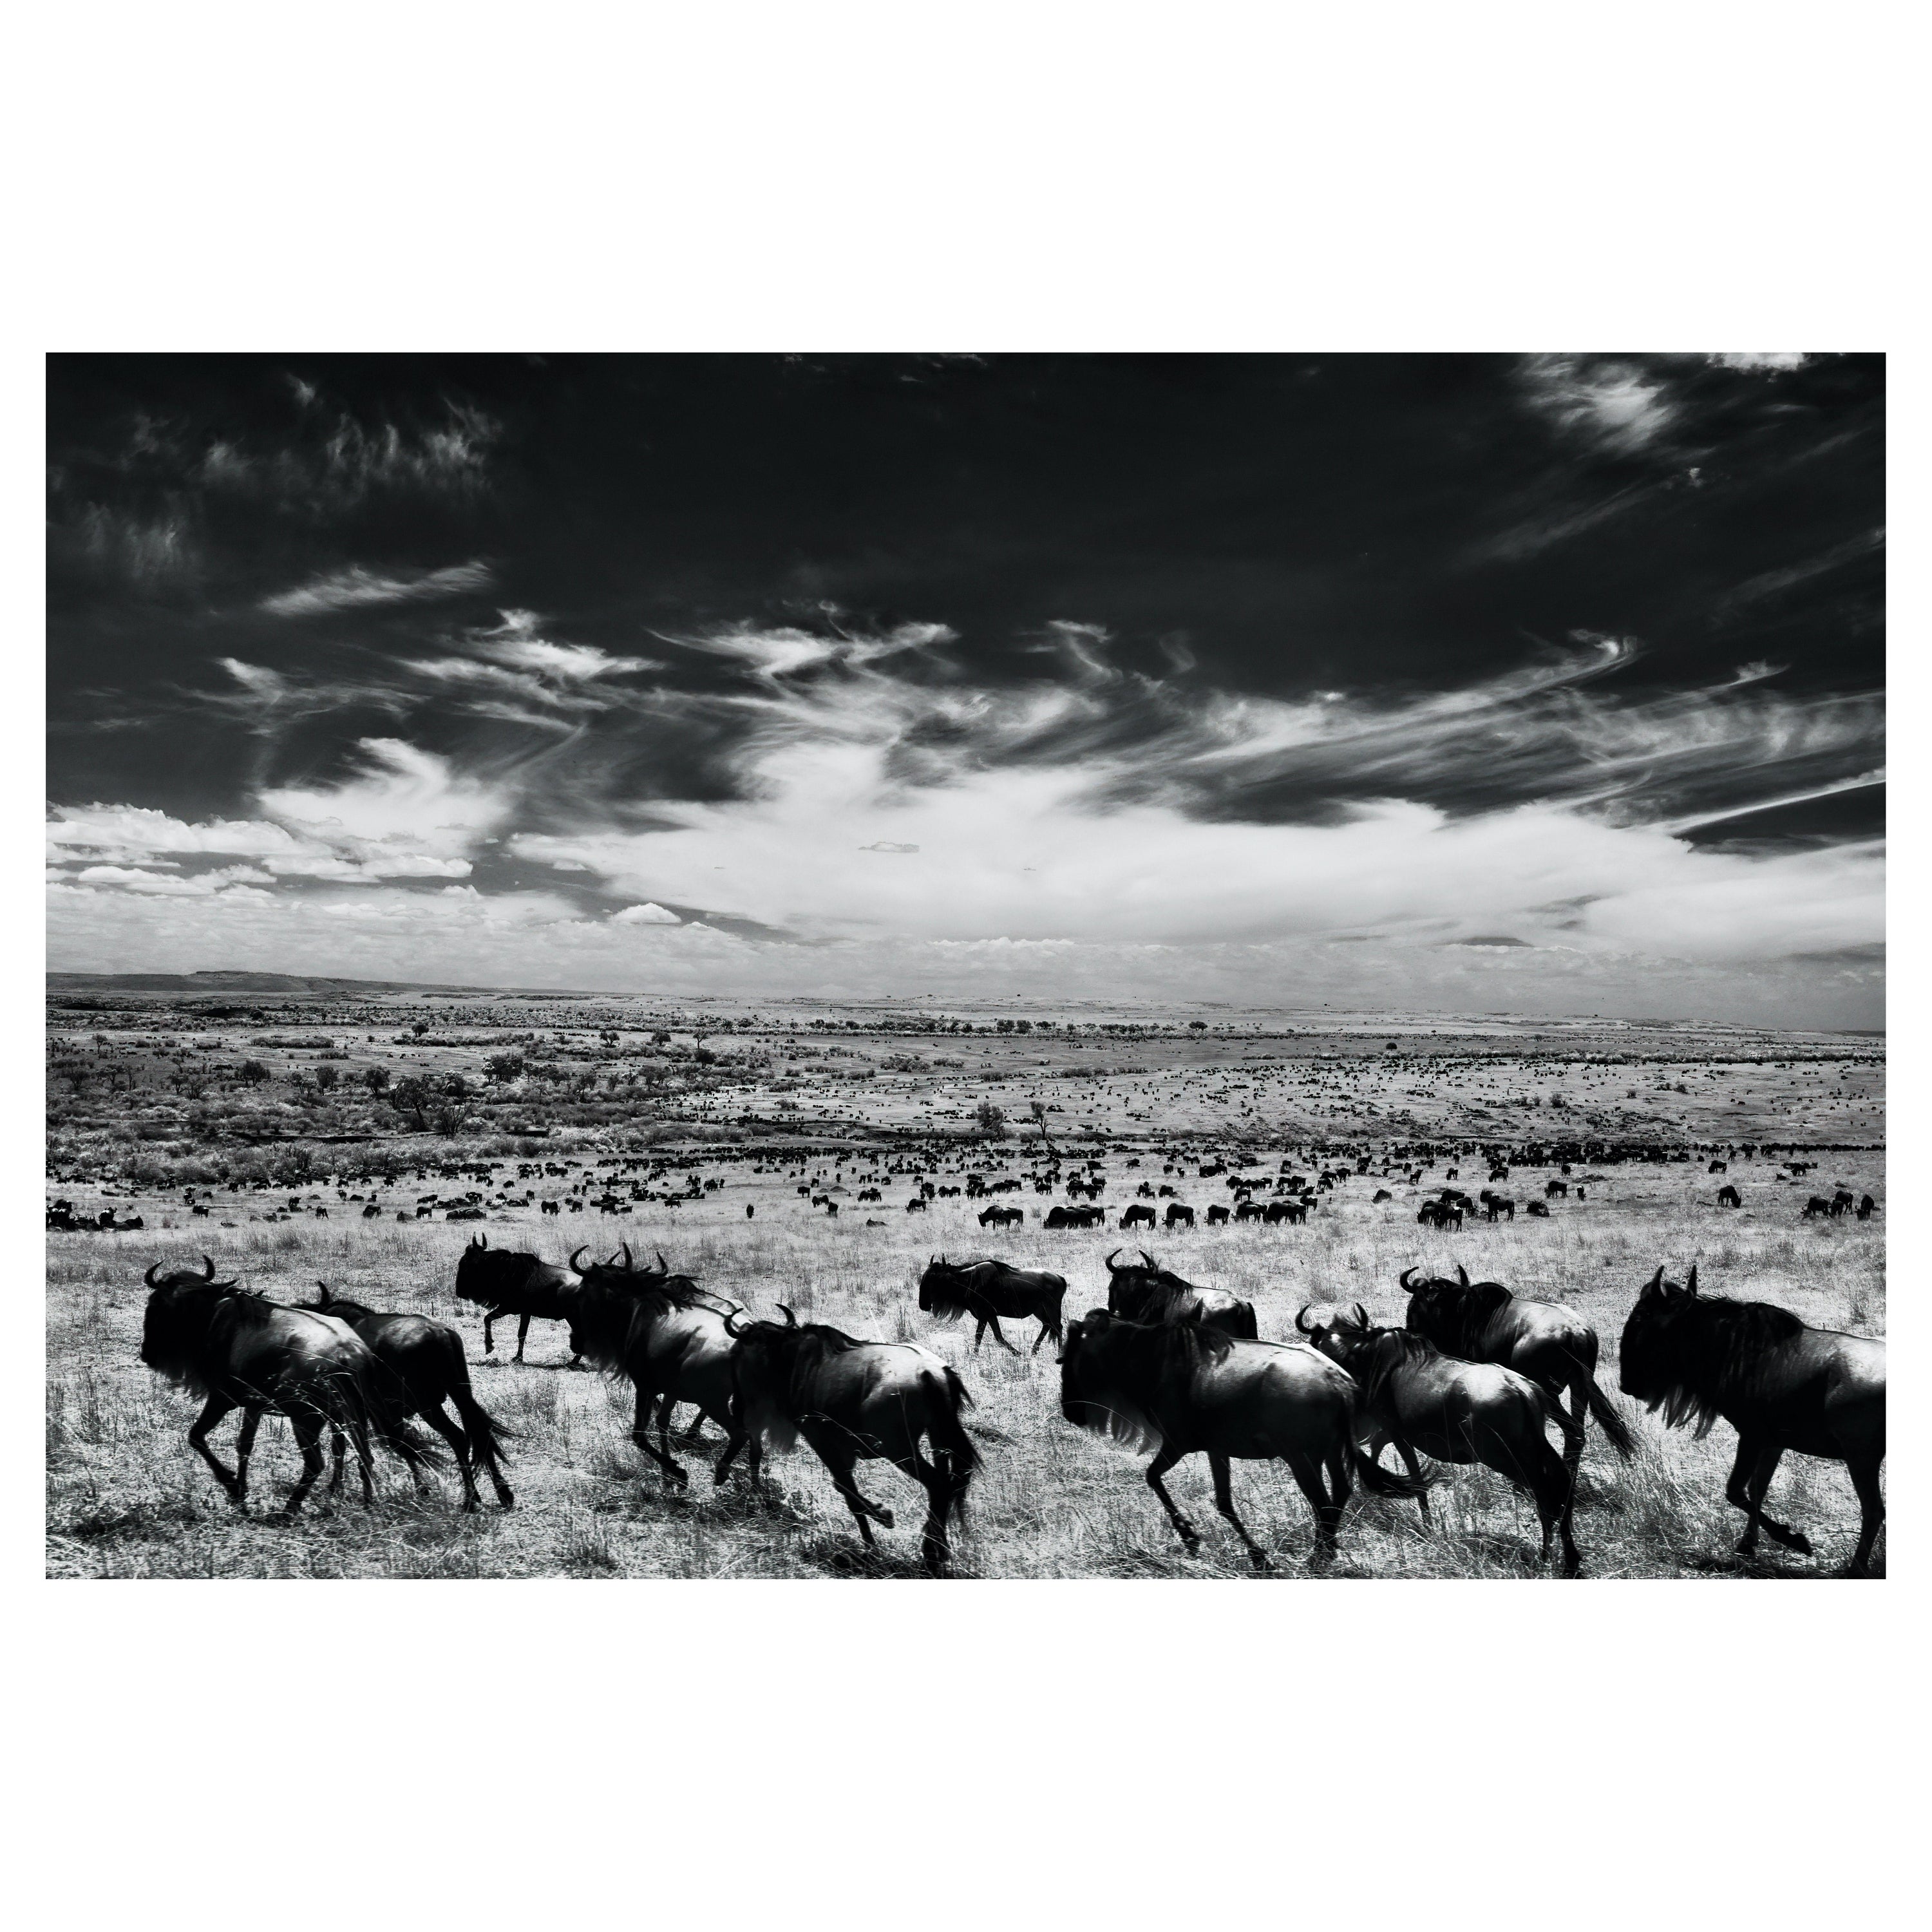 Landscape Photograph Aditya Dicky Singh - Paysage Nature Grand noir et blanc Photographie infrarouge Kenya Afrique Vie sauvage